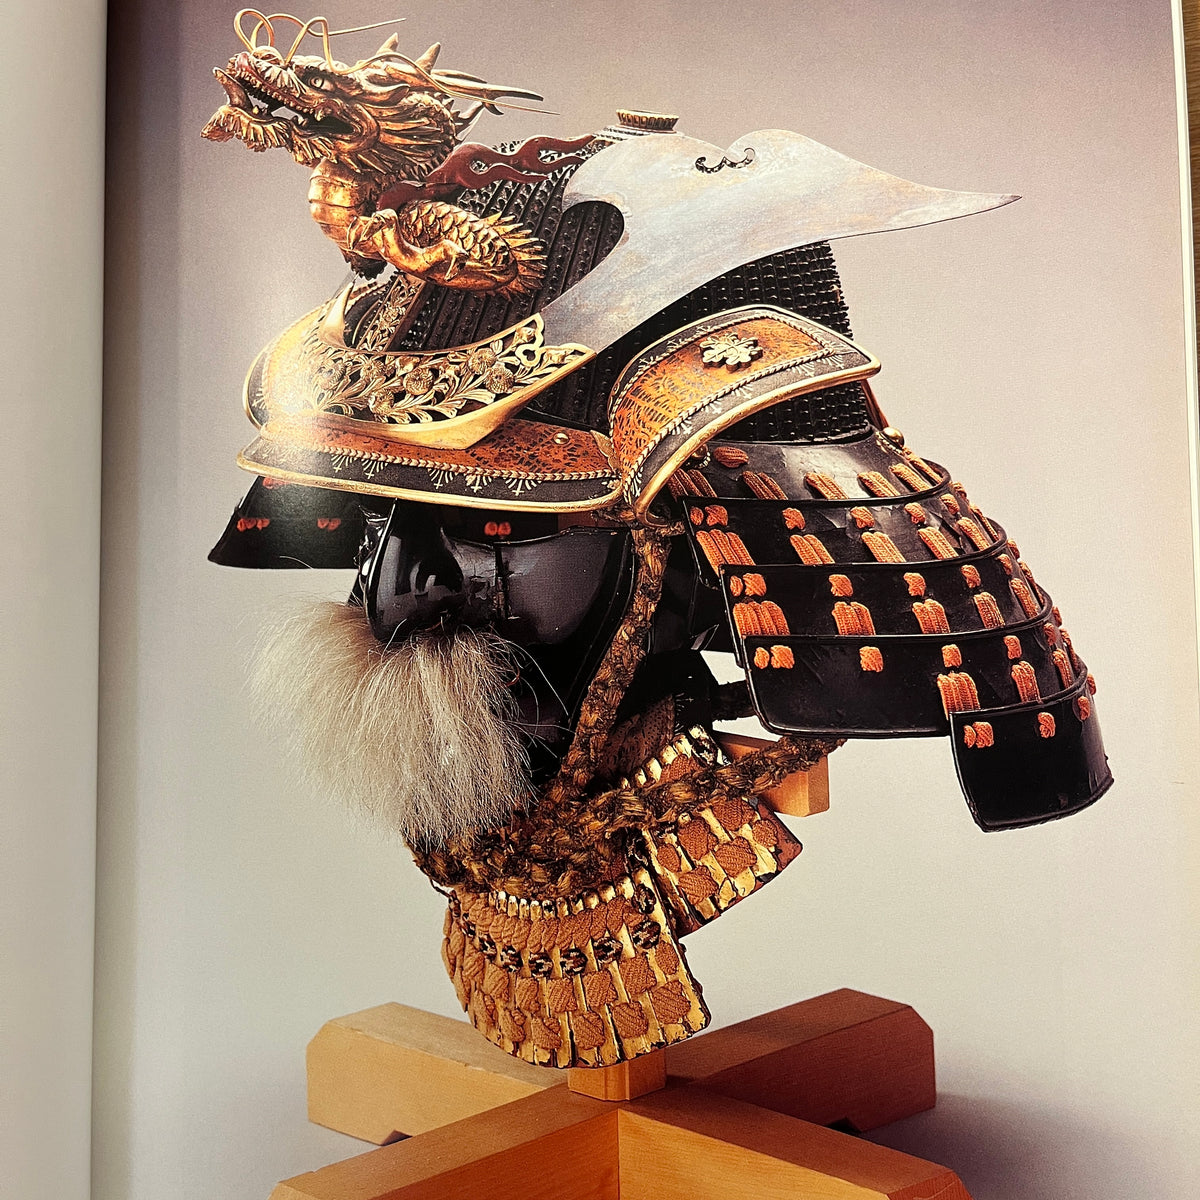 Japanese Armor: the Galeno Collection, Ian Bottomley, 1998, Near Fine